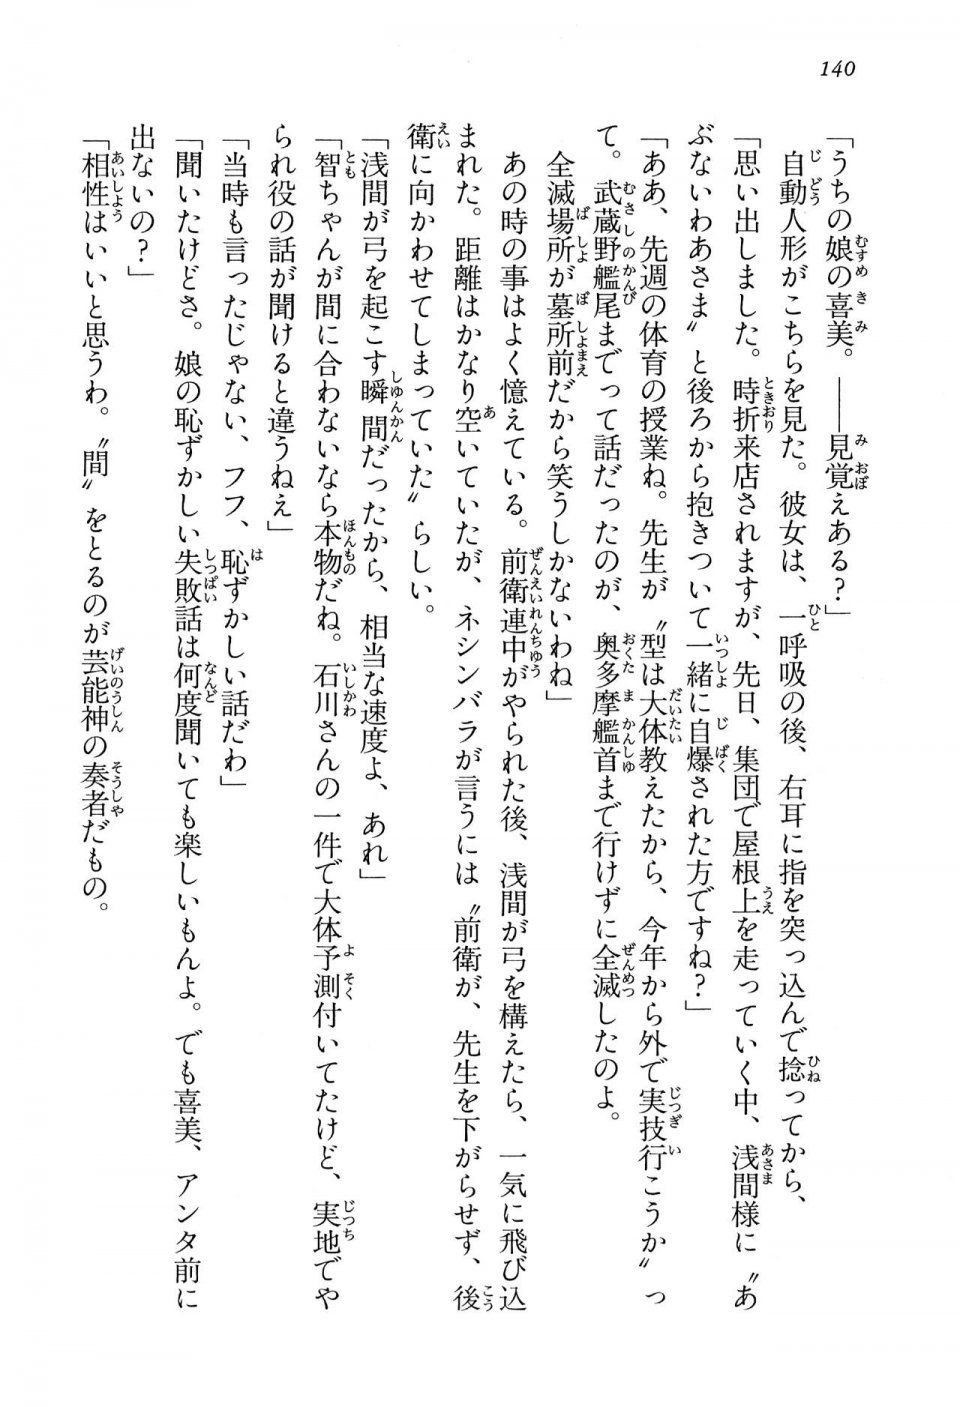 Kyoukai Senjou no Horizon BD Special Mininovel Vol 1(1A) - Photo #144